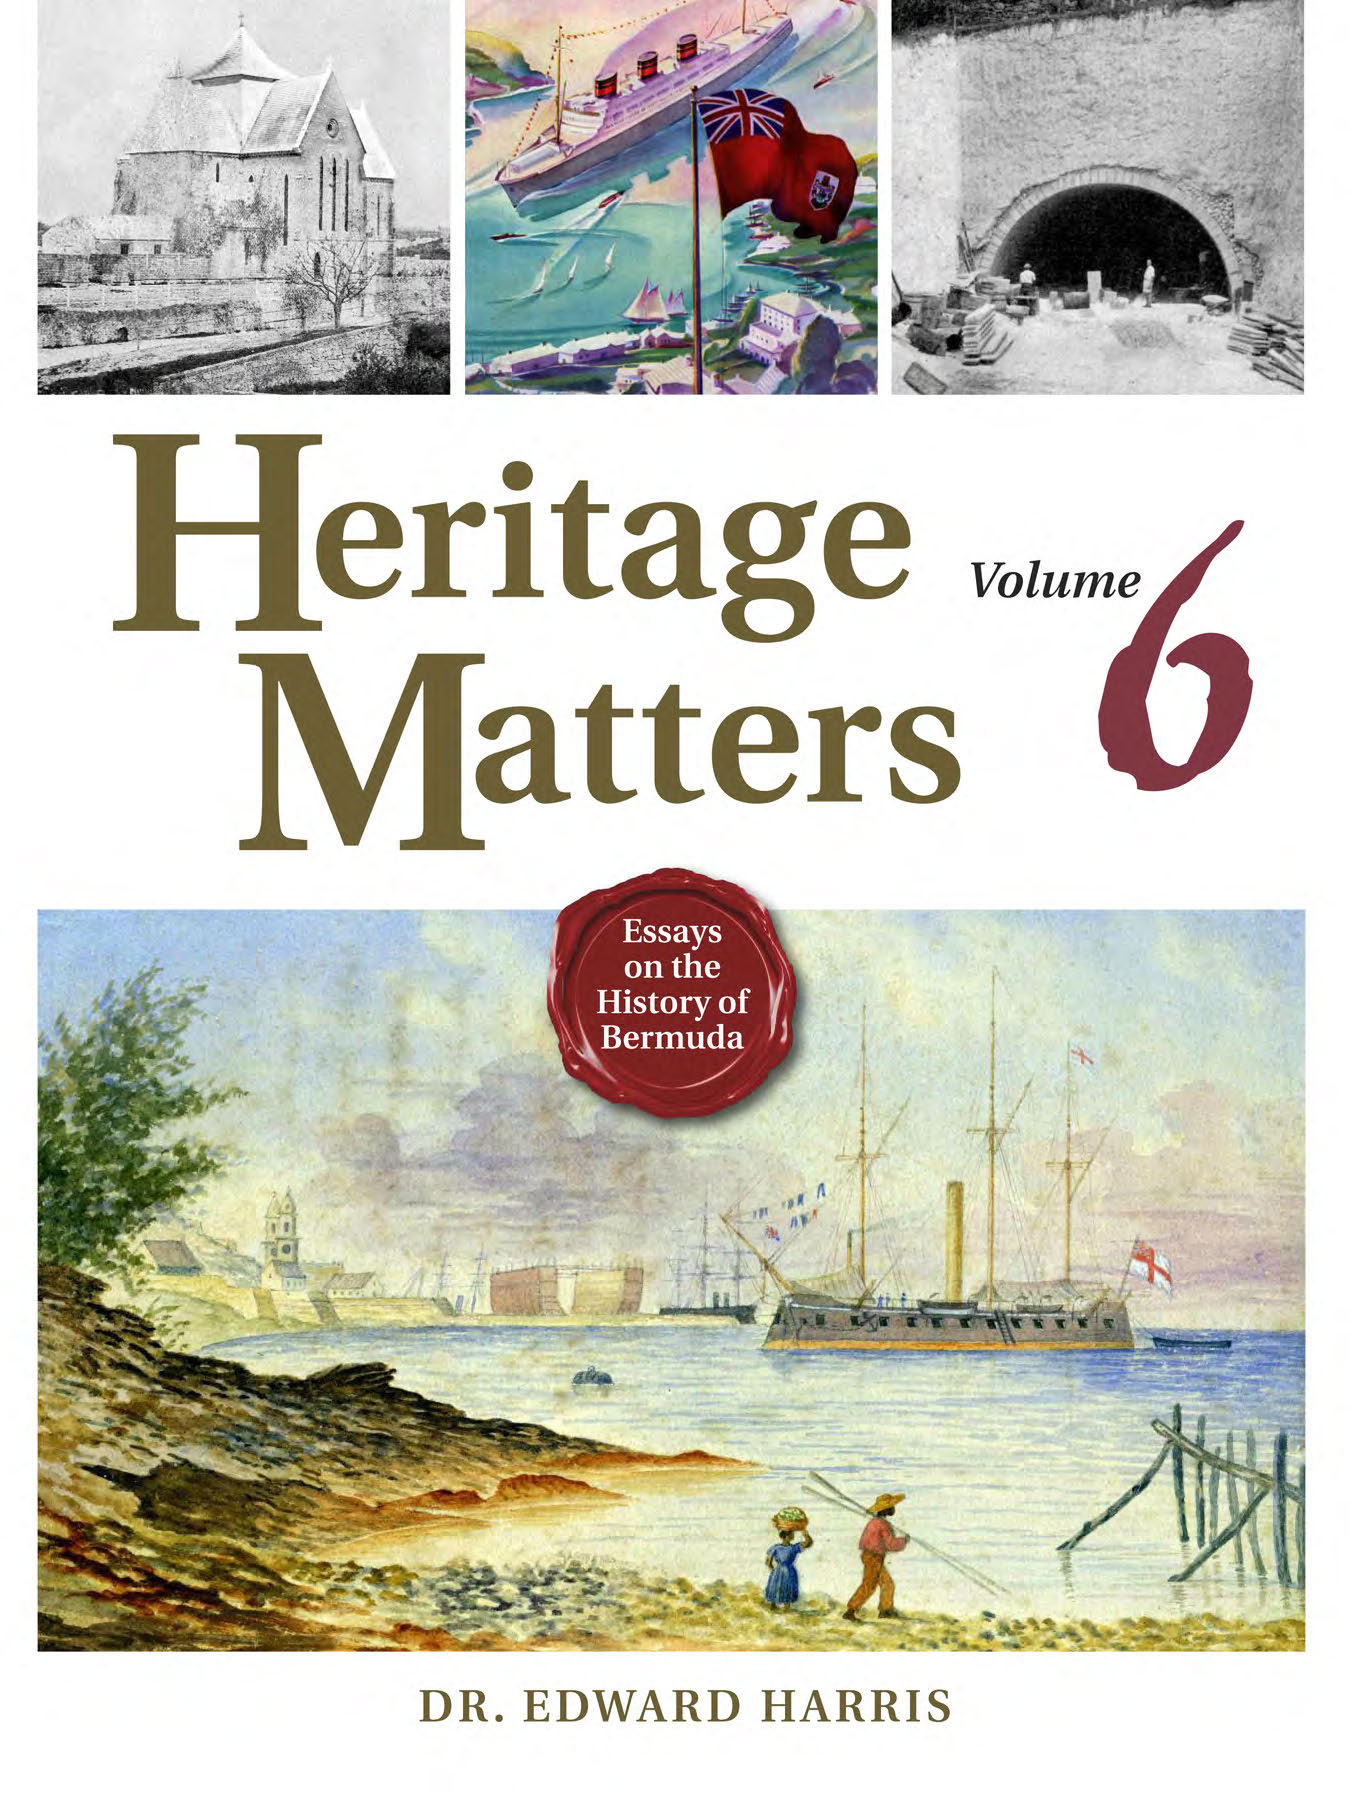 Heritage Matters Volume 6